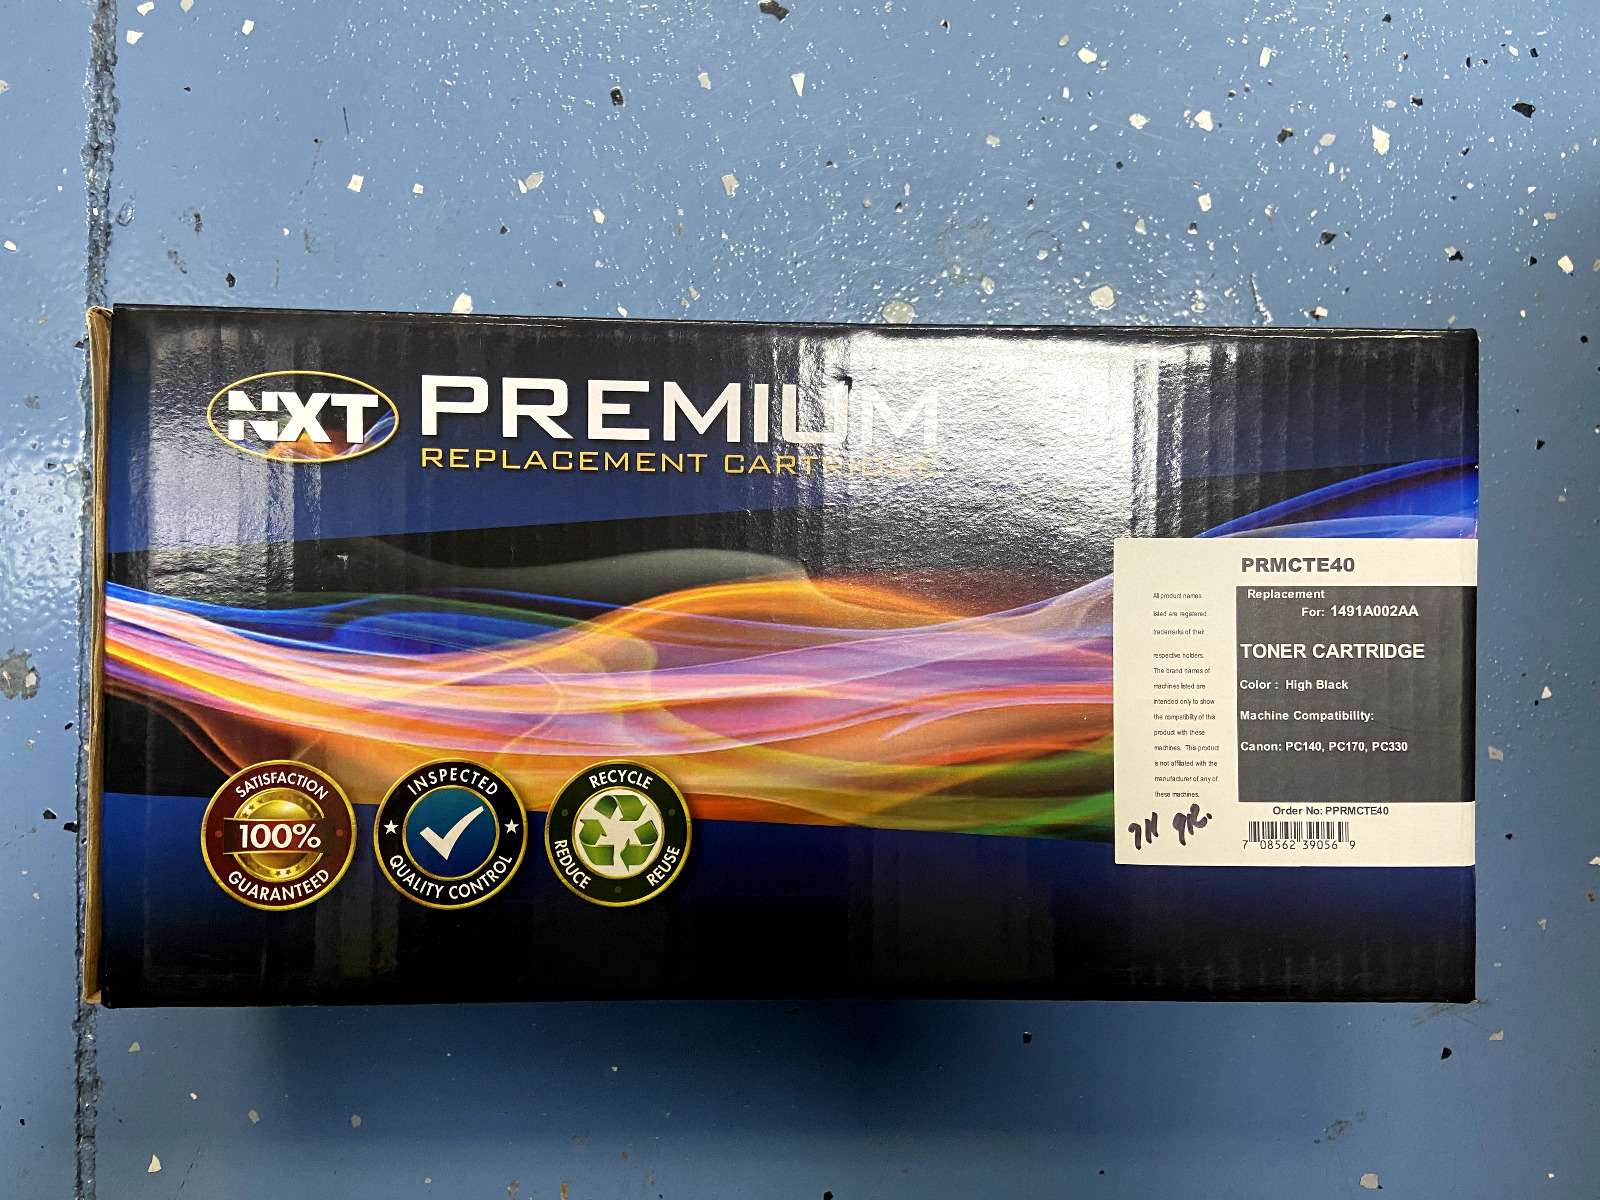 NXT Premium PRMCTE40 1491A002AA Toner Cartridge High Black